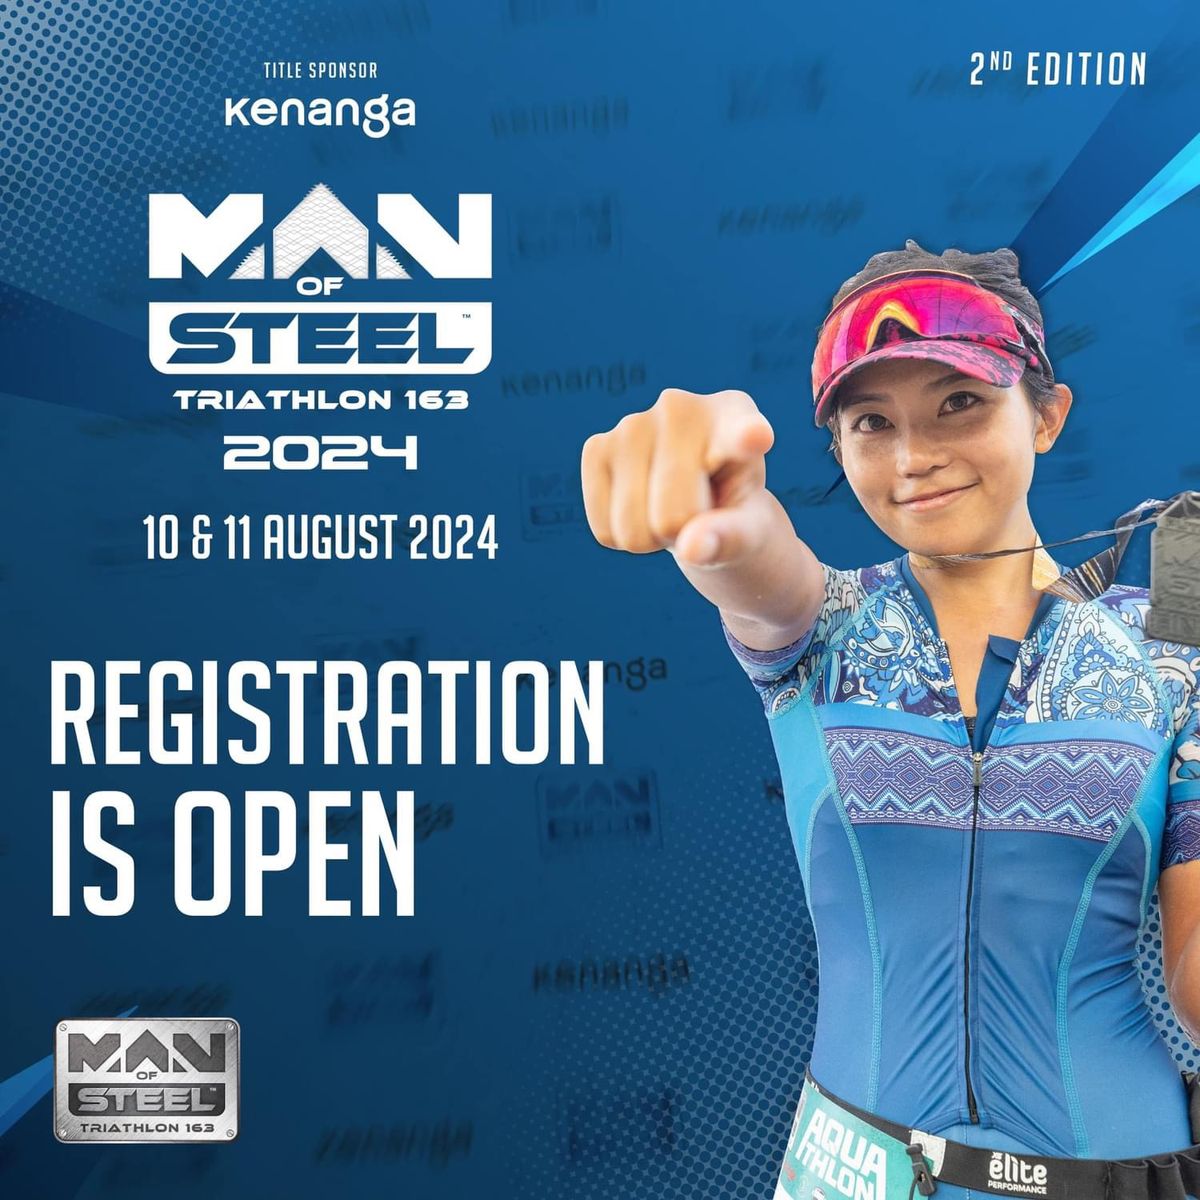 Kenanga MAN Of STEEL Triathlon 163